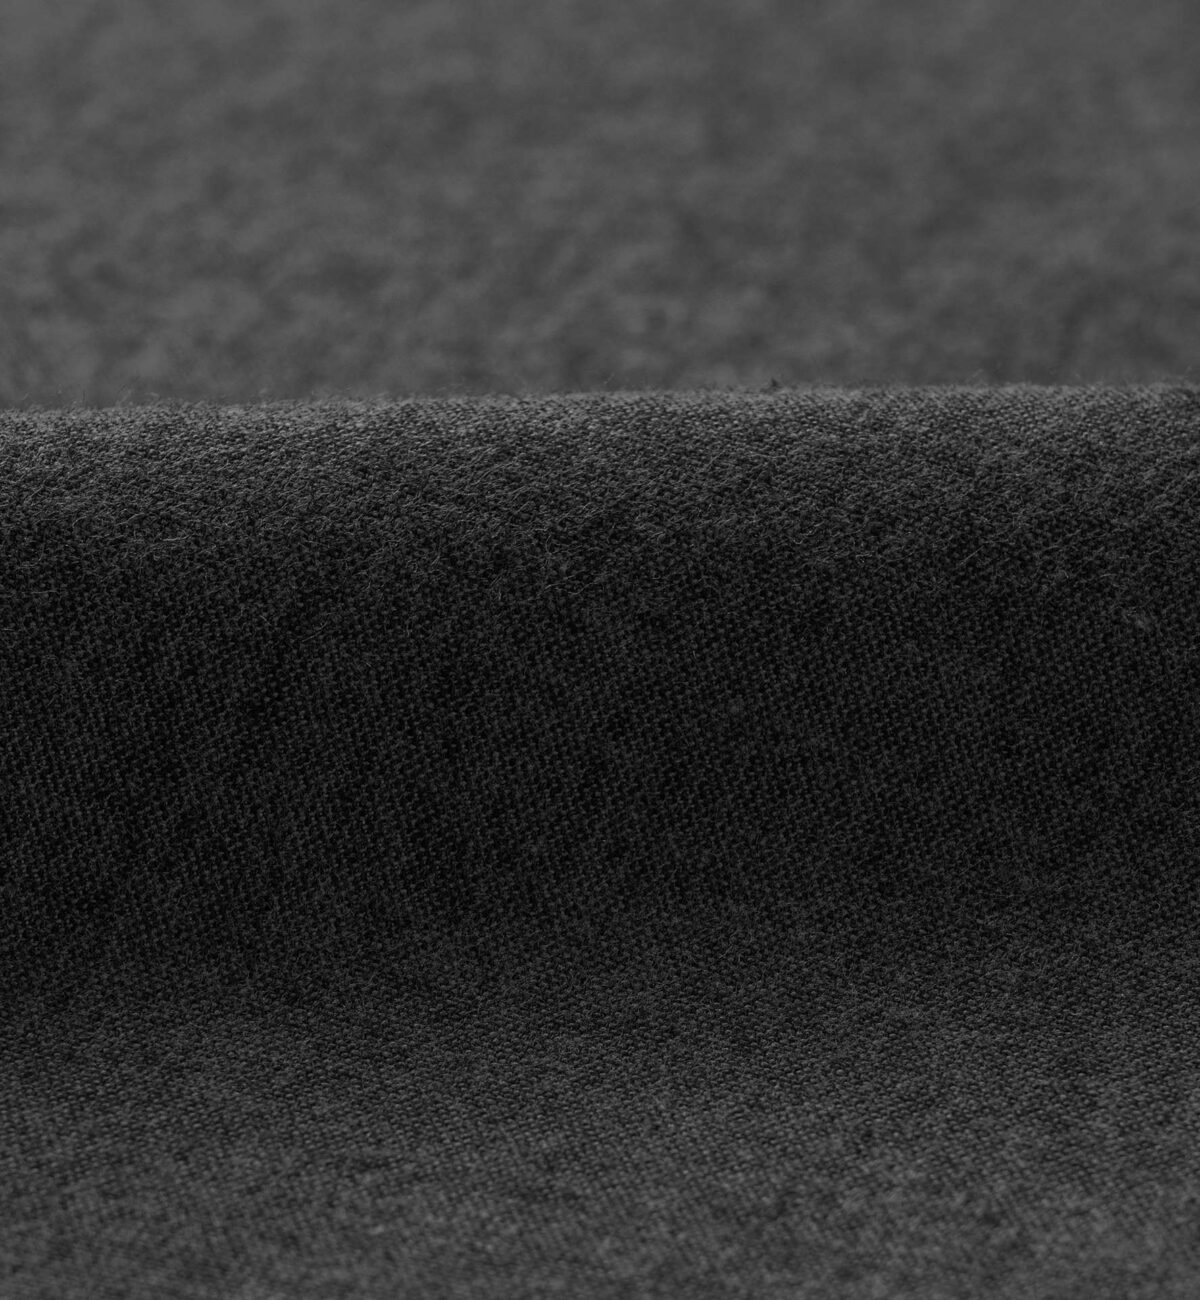 Chambray Black Fabric Swatch